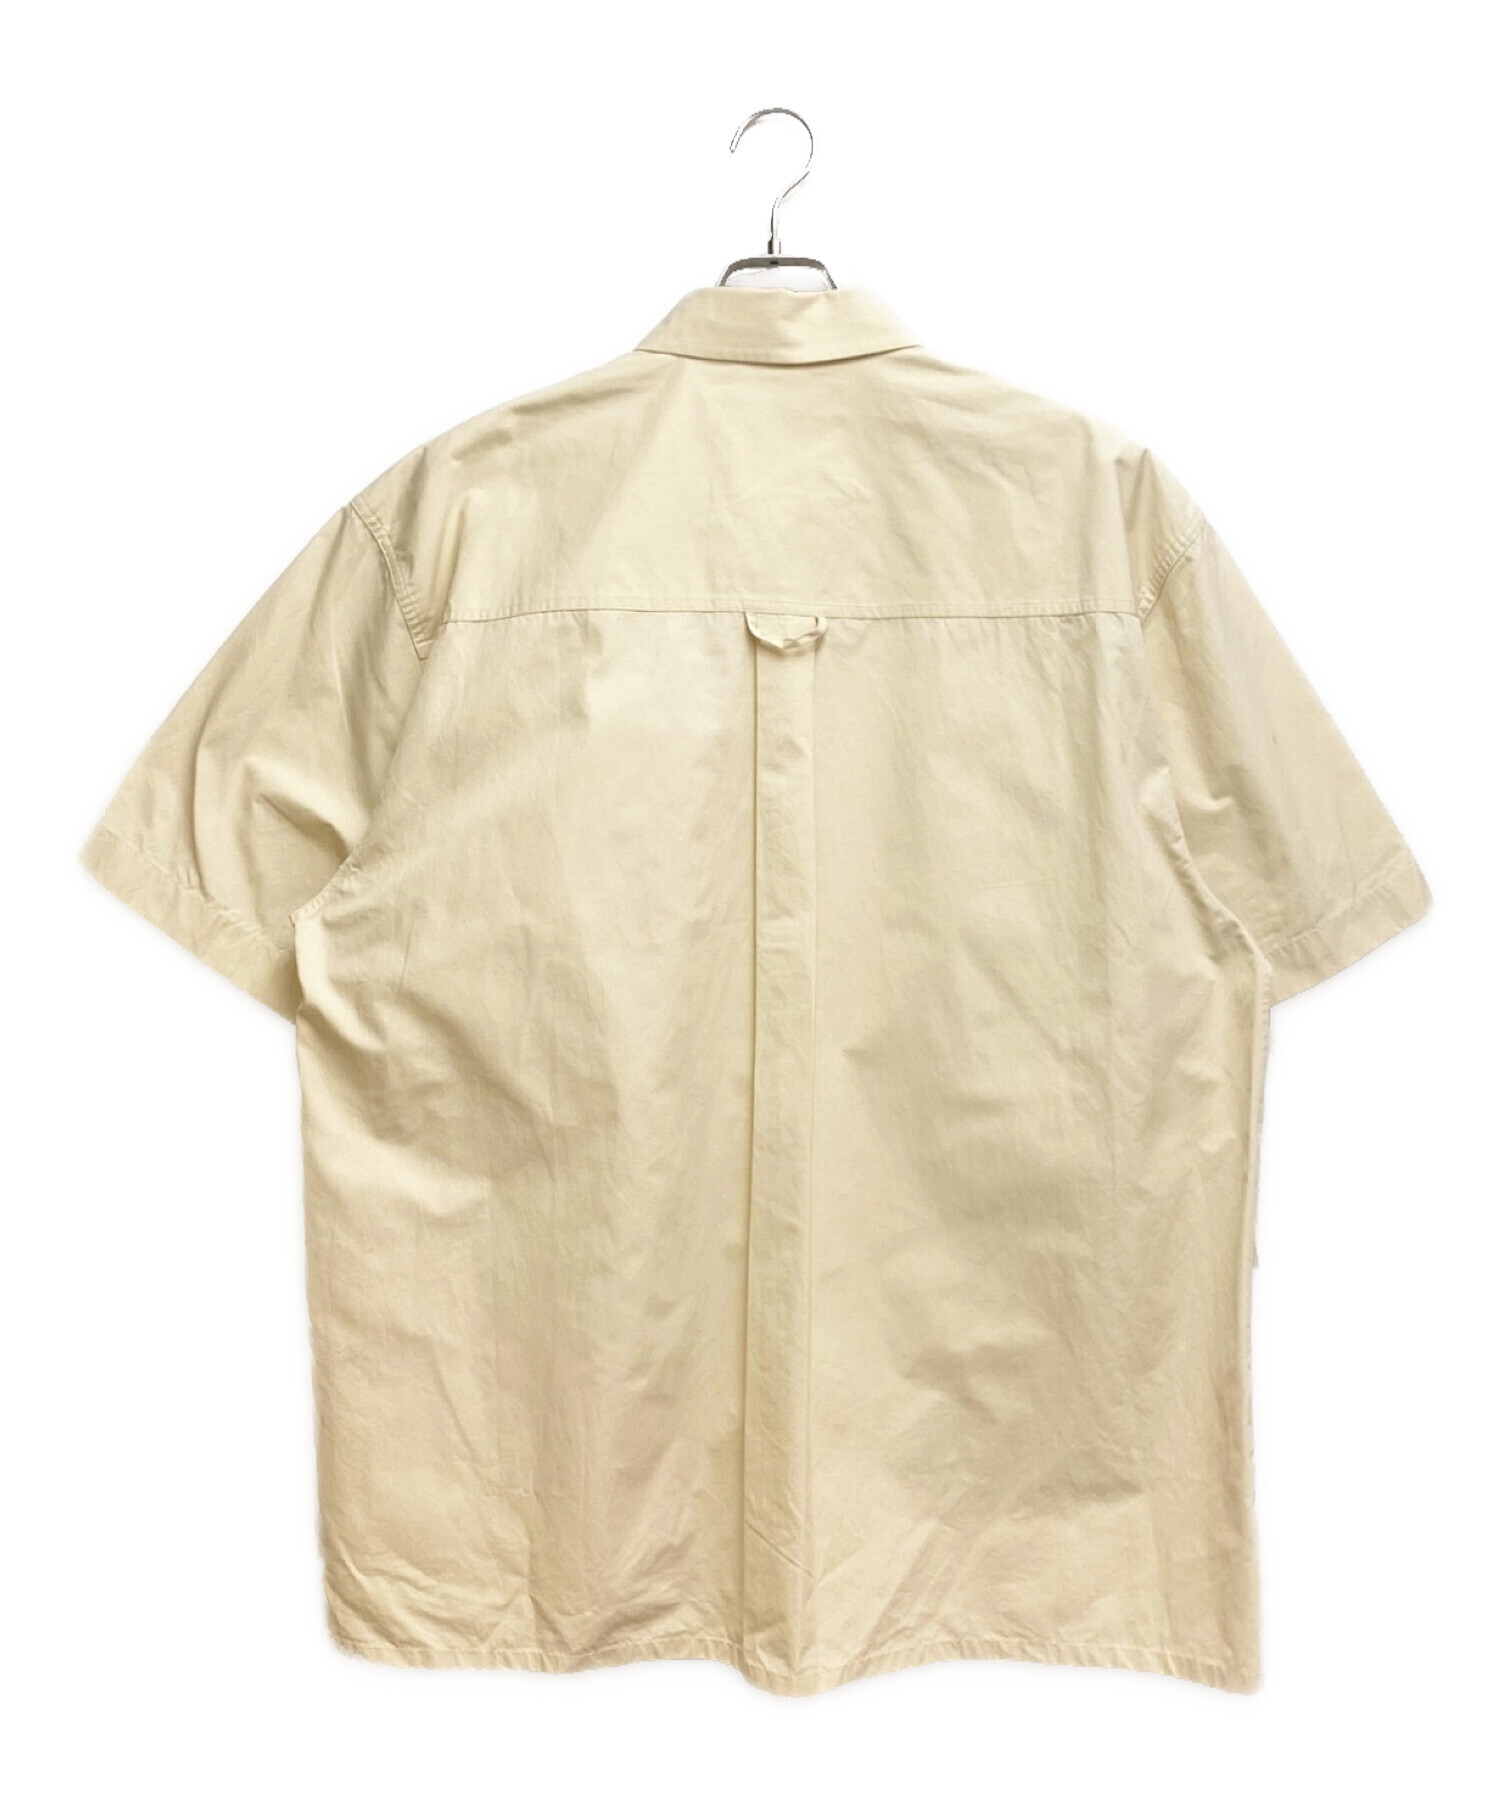 JIL SANDER (ジルサンダー) Never Fade Away Plaque Shirt （ネバ― フェイド アウェイ プラーク シャツ）  ベージュ×グリーン サイズ:42